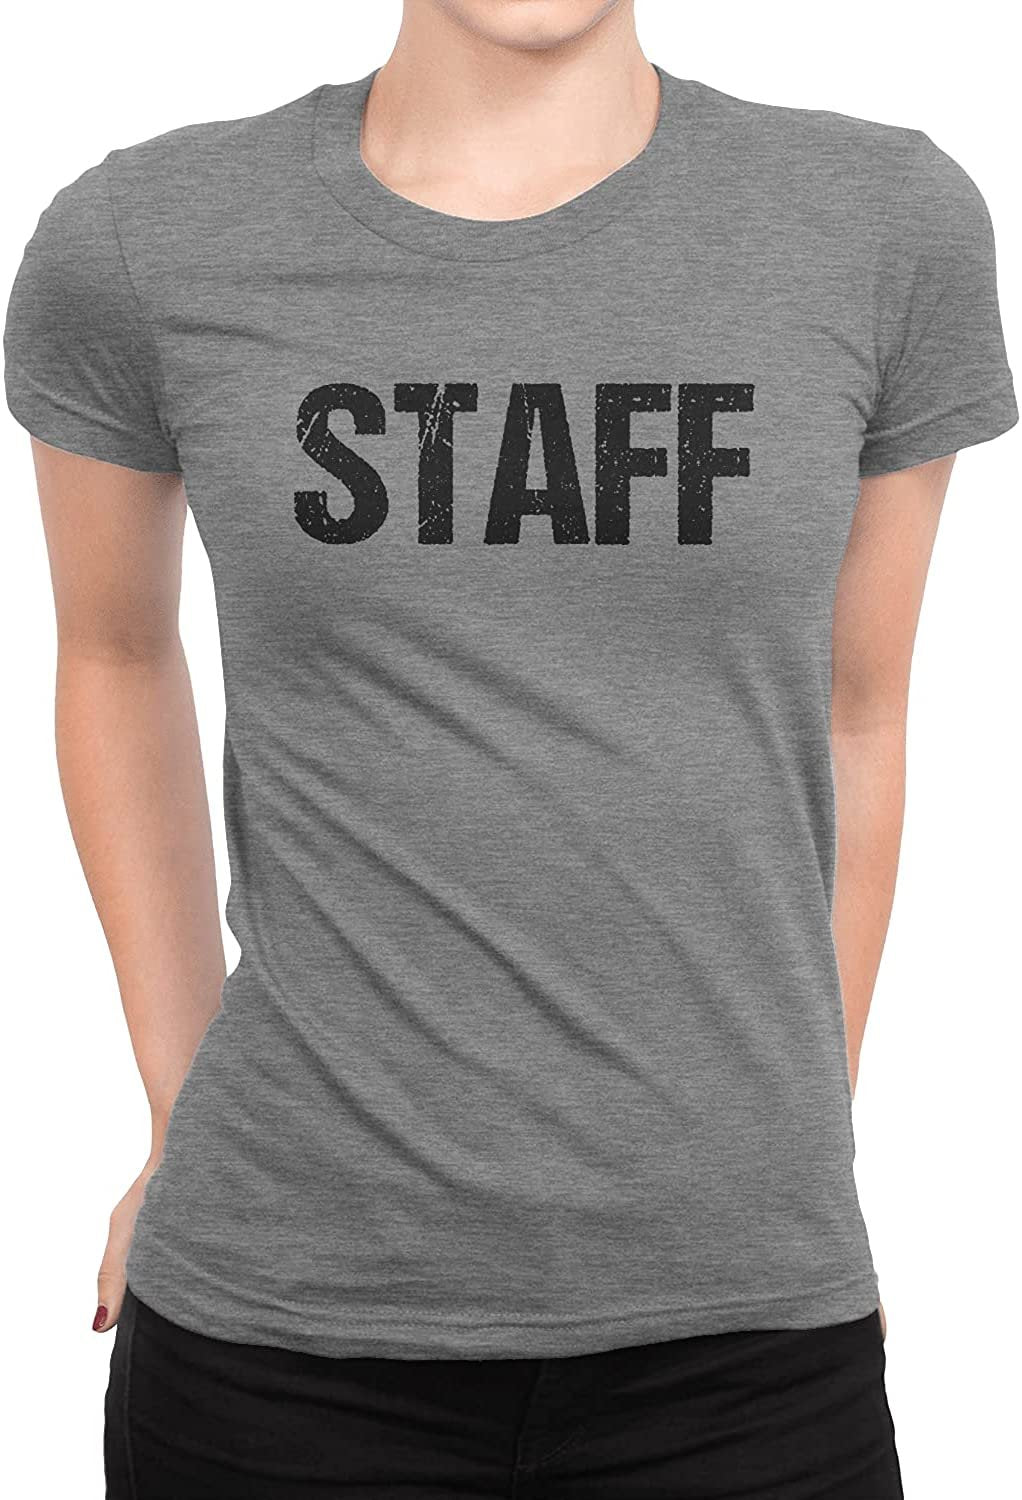 Staff Ladies Short Sleeve T-Shirt (Distressed Design, Heather Gray & Black)